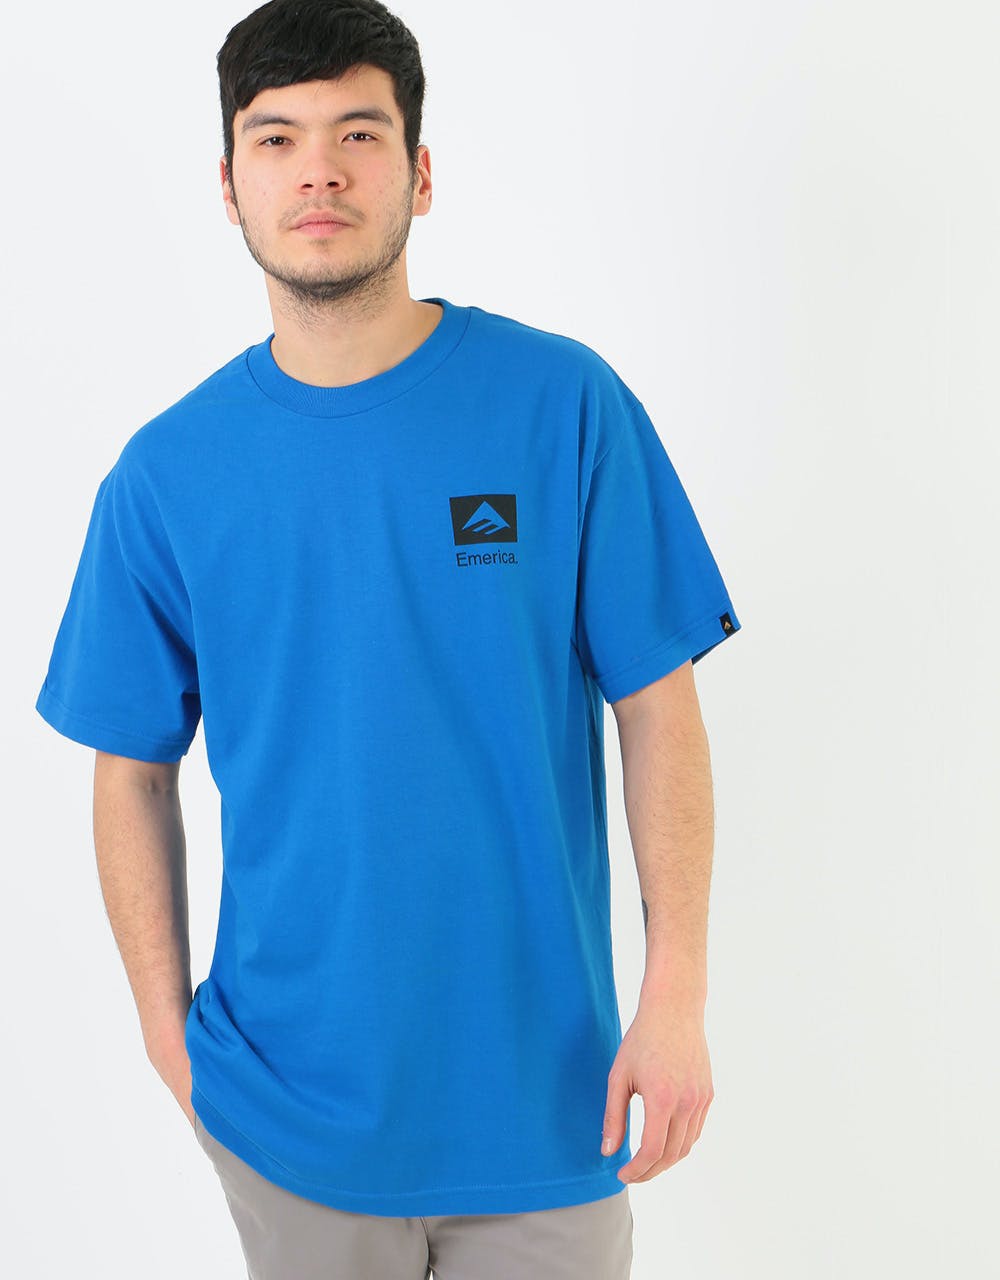 Emerica Brand Combo T-Shirt - Blue/Black